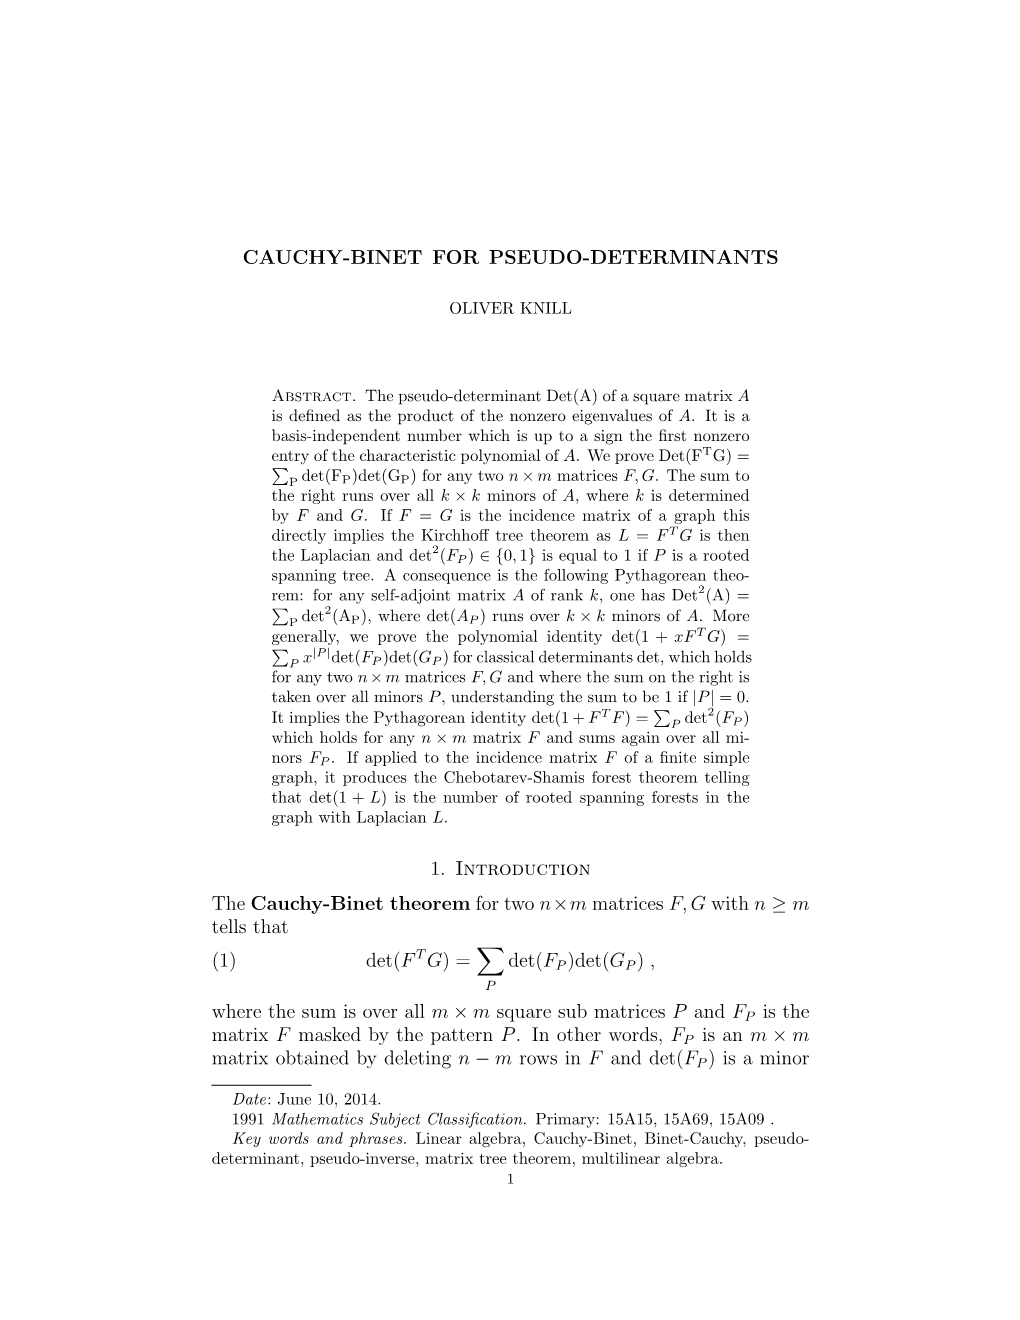 Cauchy-Binet for Pseudo-Determinants